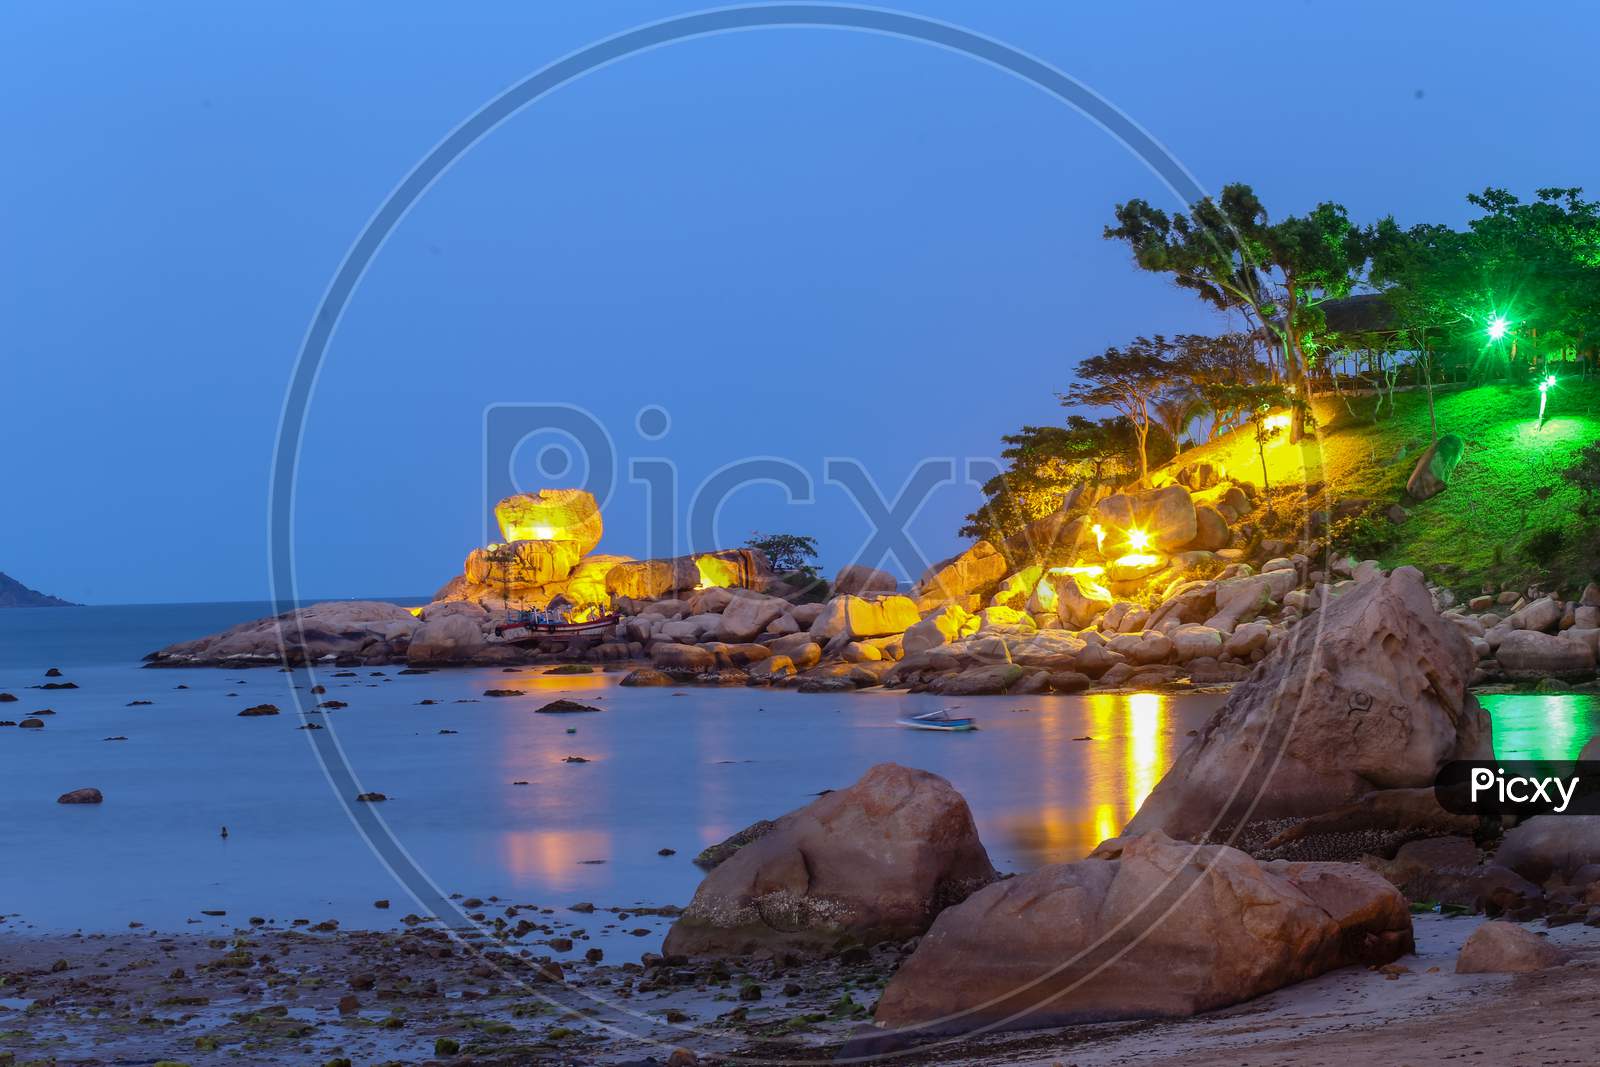 Night View Of Hon Chong Island - A Popular Tourist Destination At Nha Trang Bay, Vietnam